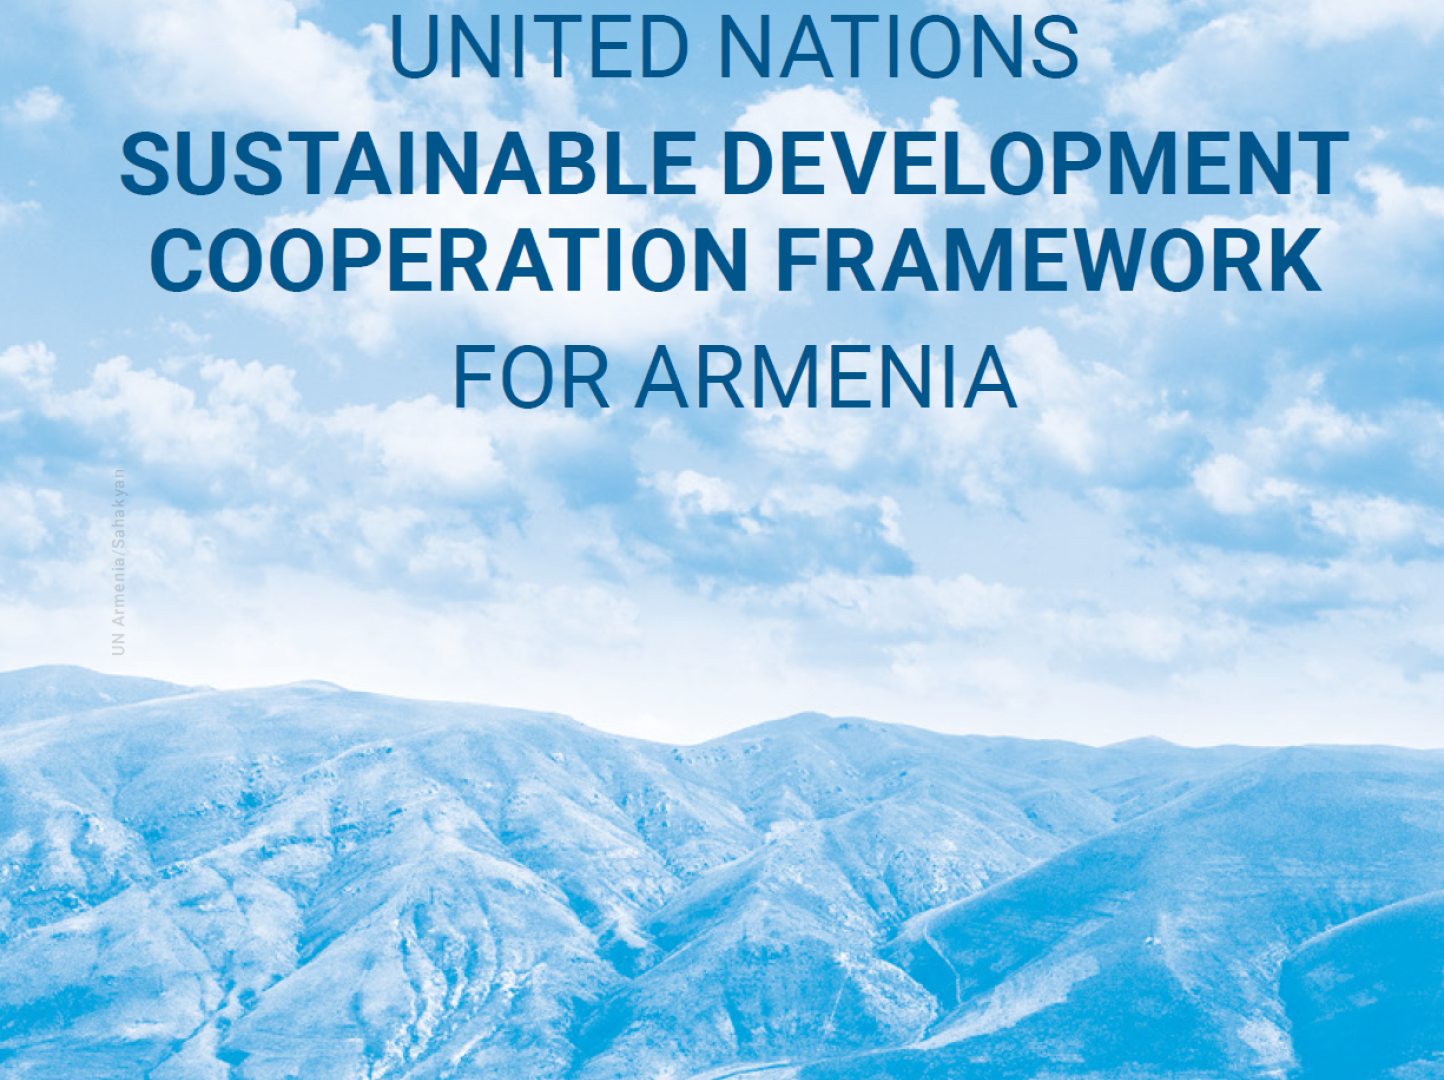 2021-2025 Cooperation Framework cover